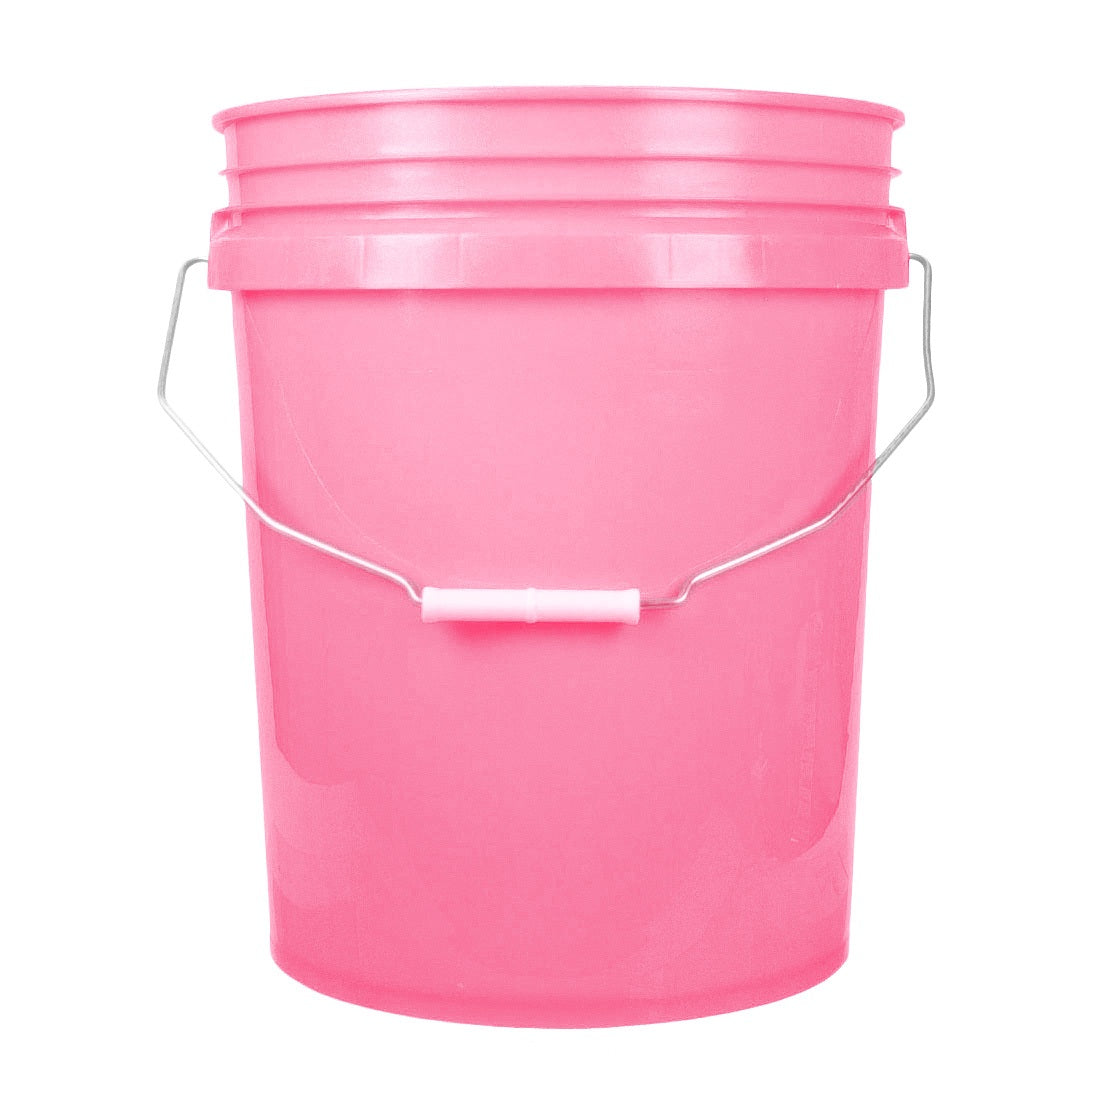 XERO Round Bucket Pink Front View